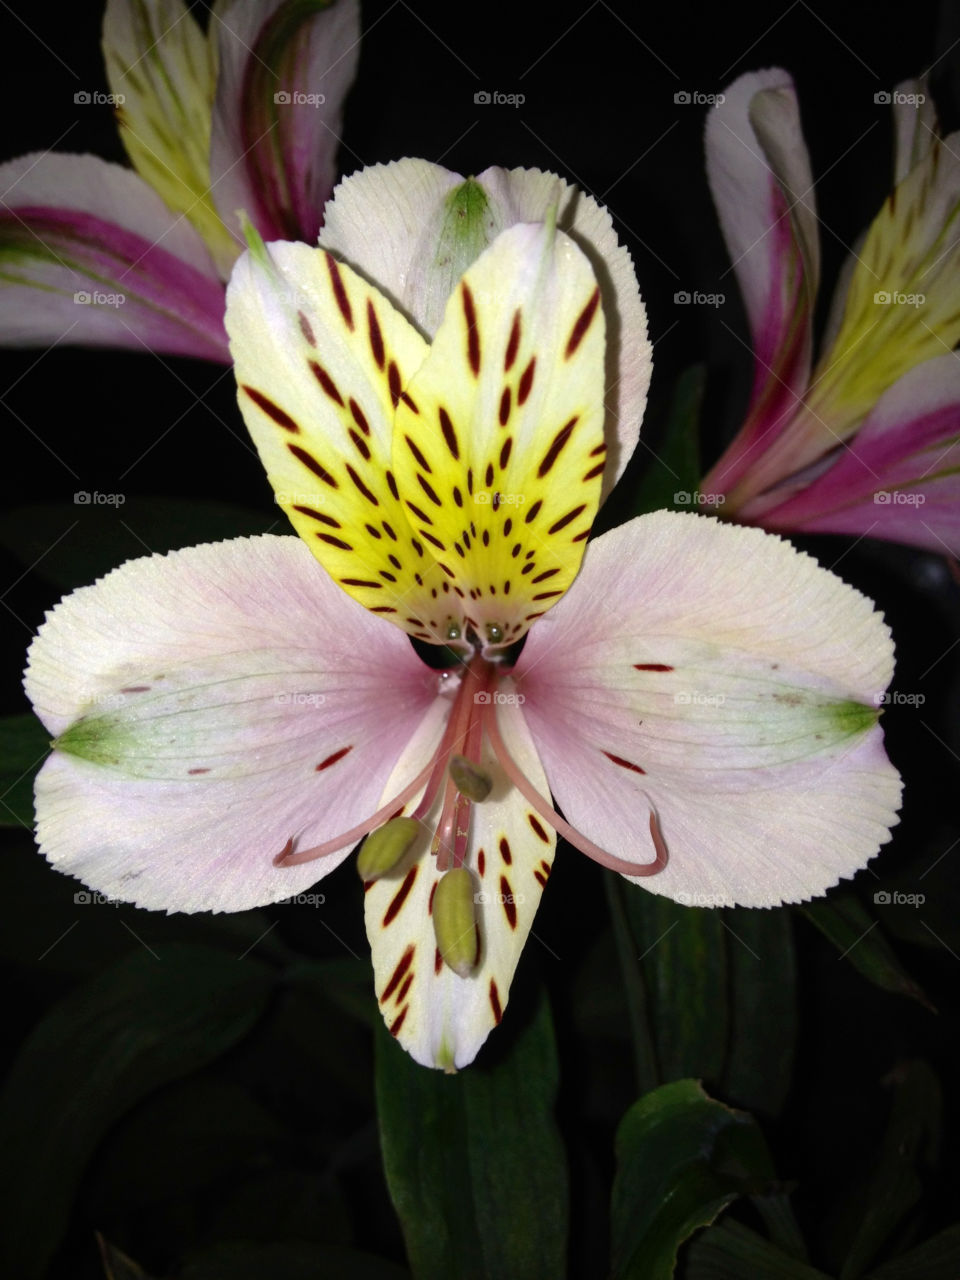 flower close up alstroemerias by gdyiudt